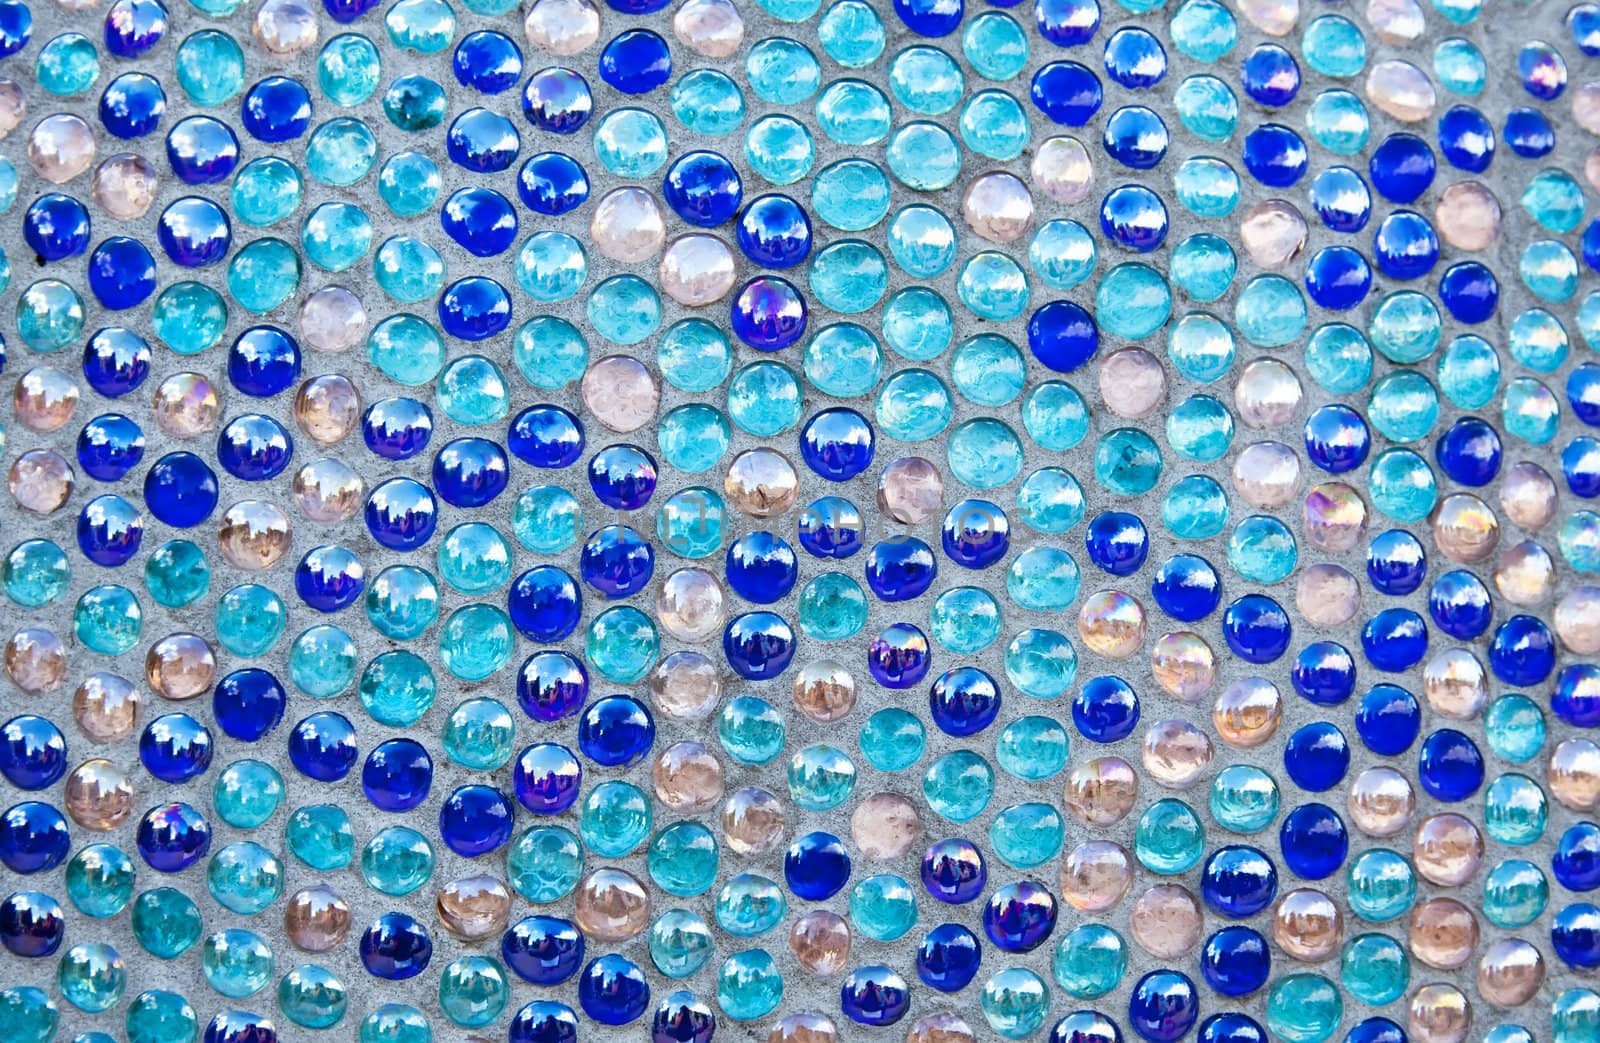 Round blue glass mosaic tile pattern